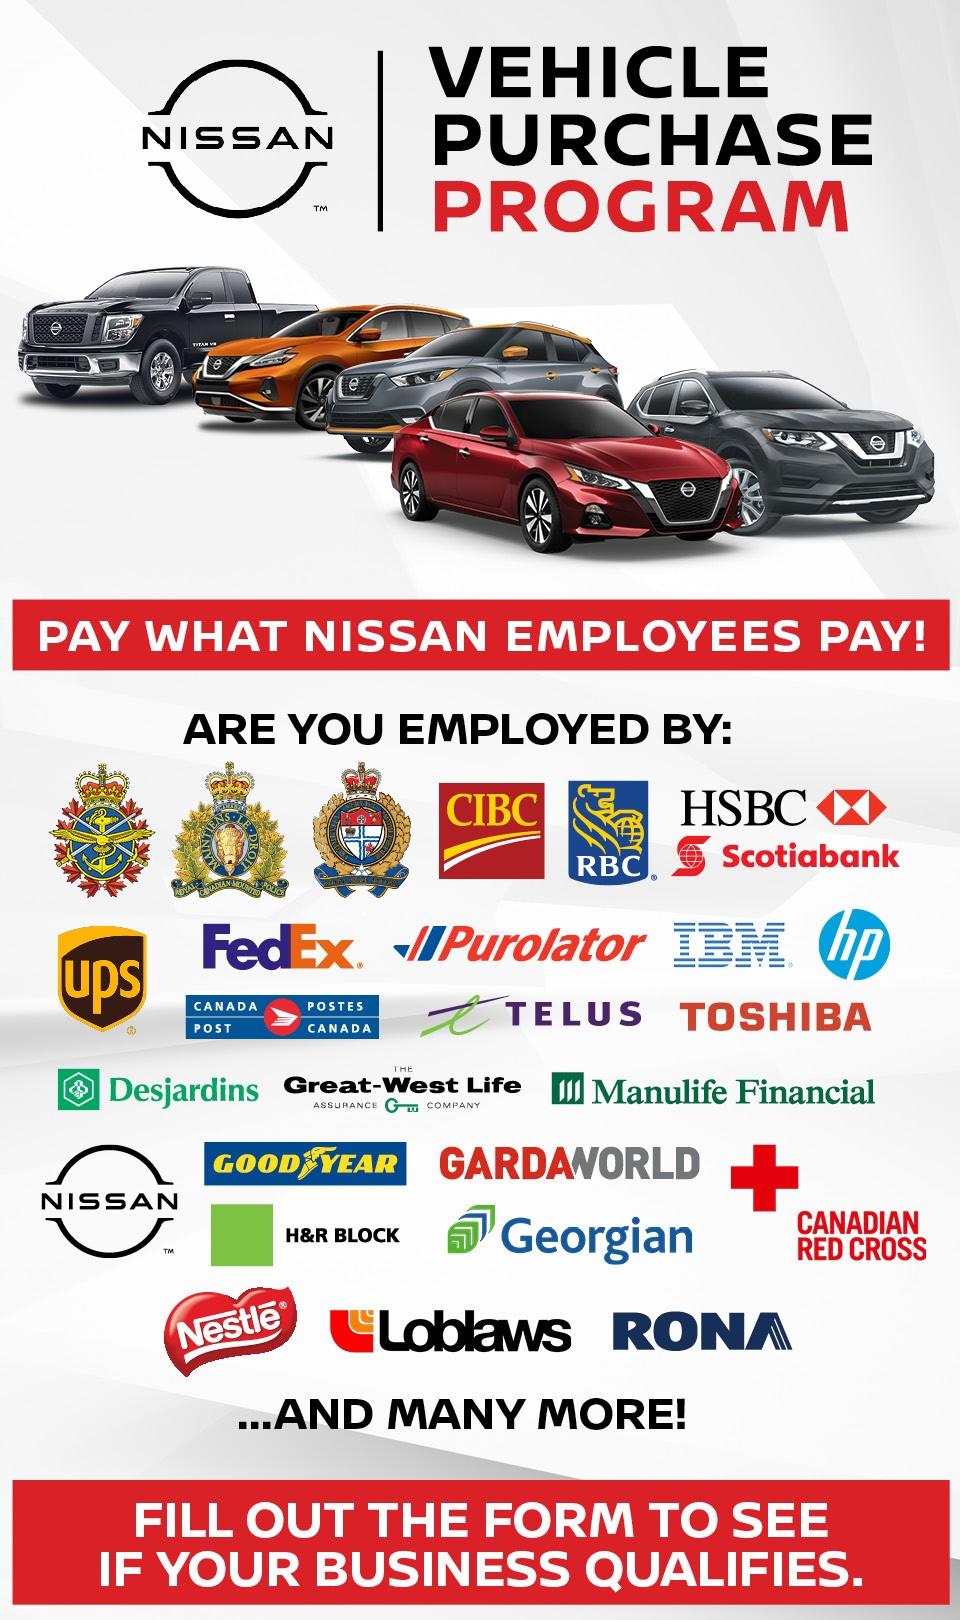 Nissan Vehicle Purchase Program